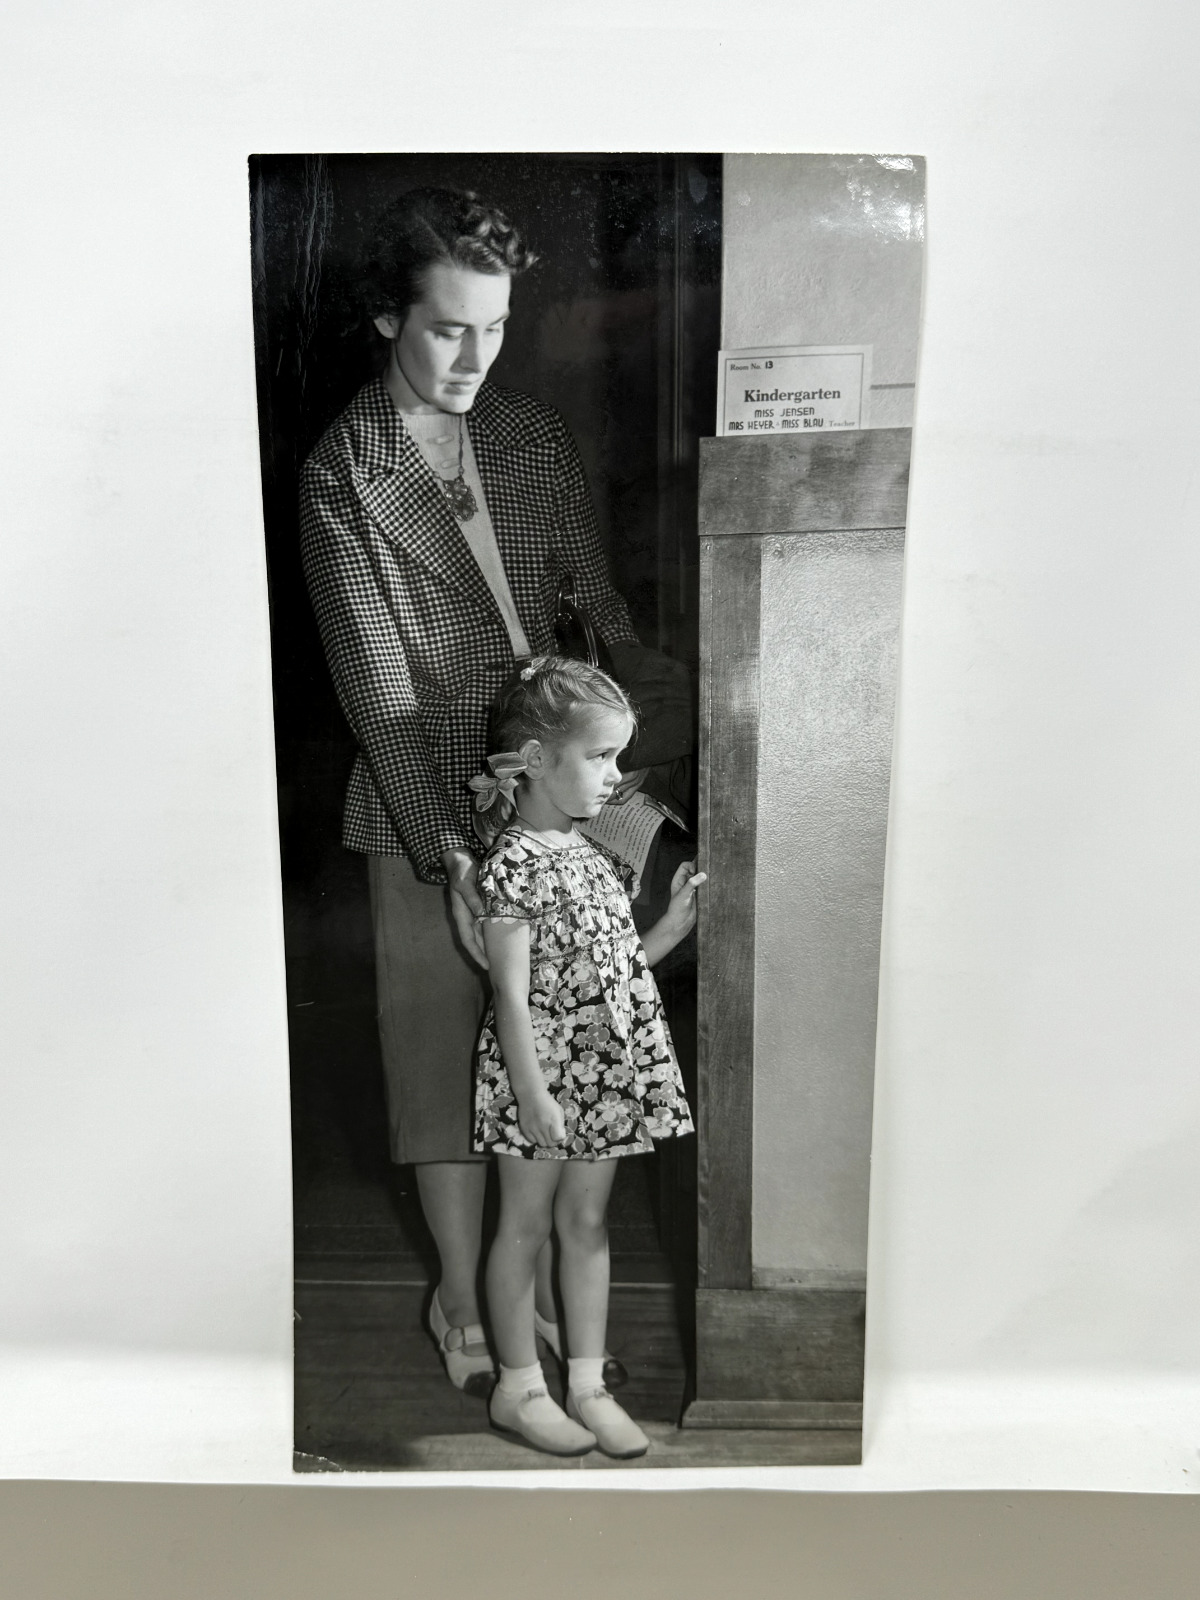 Original Oversized Press Photo: Kindergarten Teacher/Child Gift 30's 40's 13.5x6